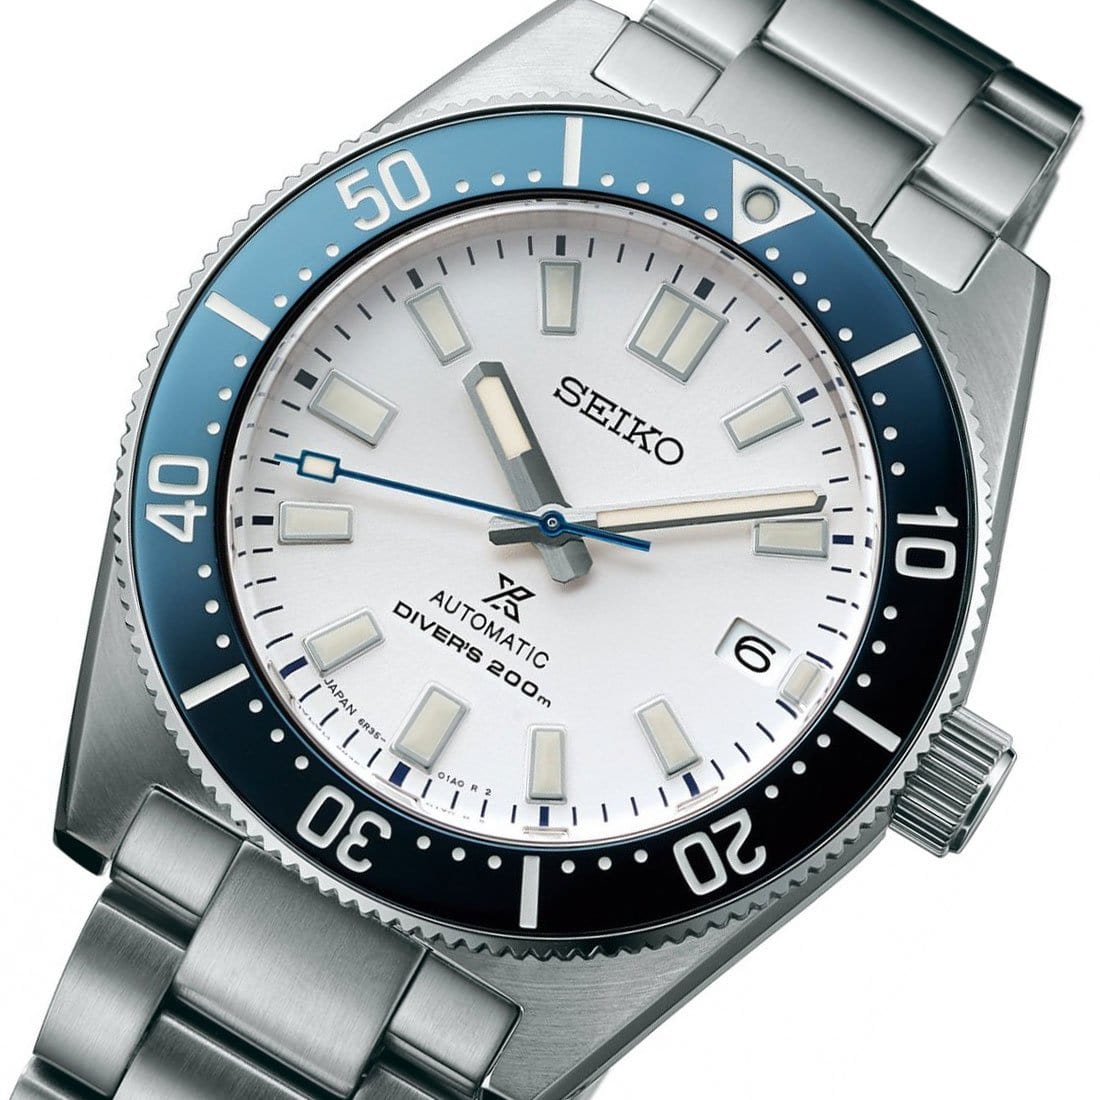 Seiko Prospex 140th Anniversary SBDC139 Automatic Limited Edition JDM Watch